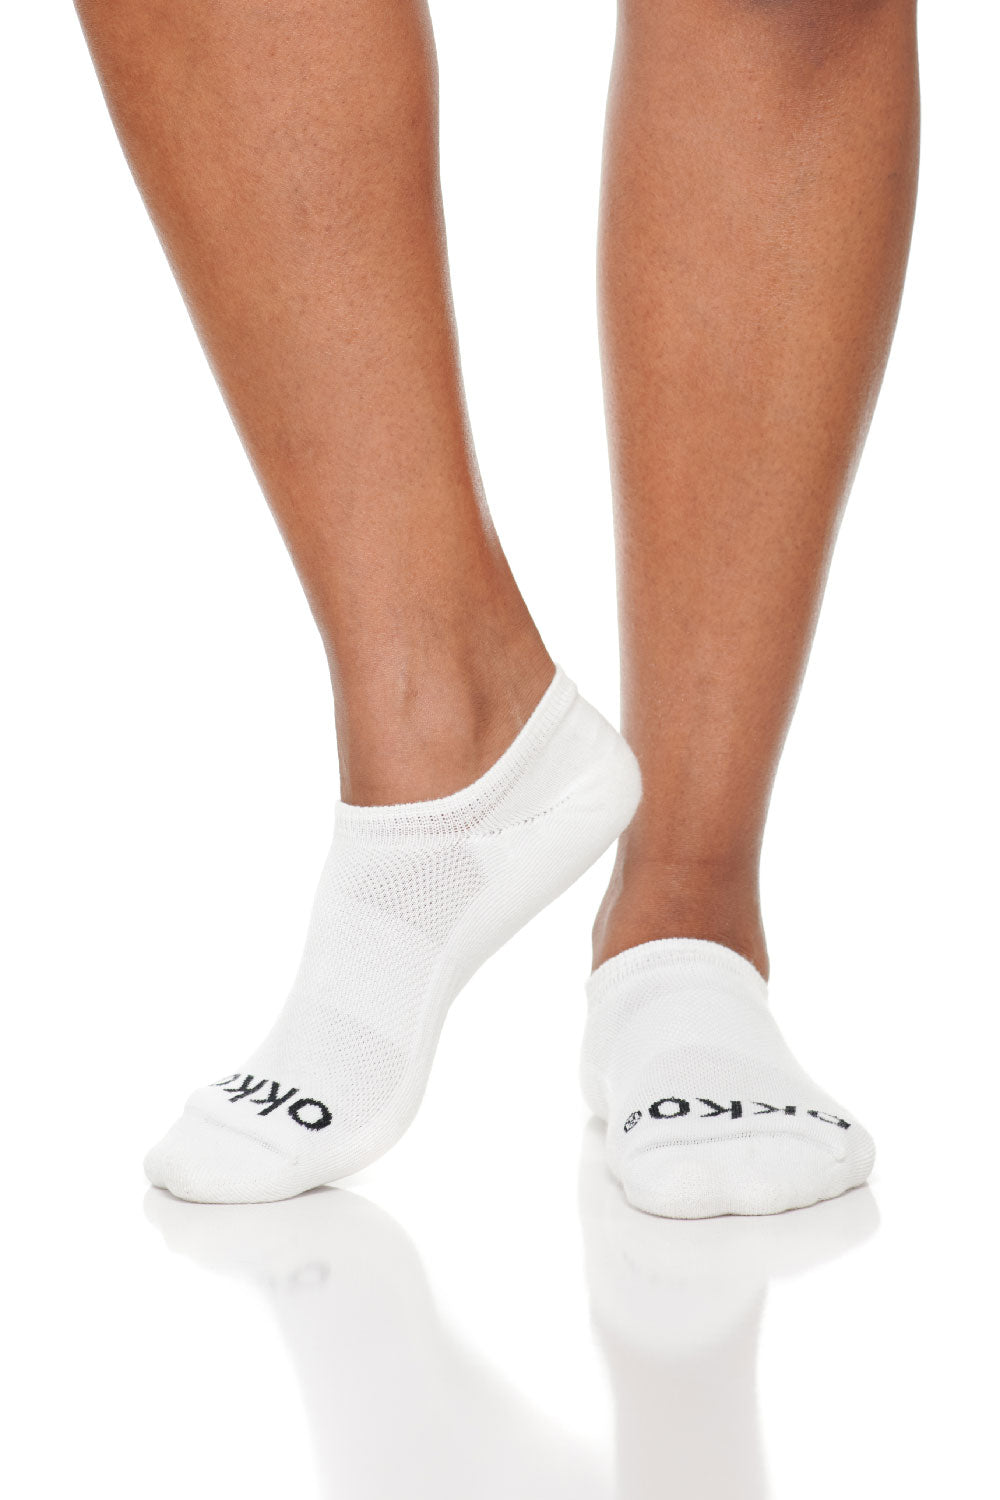 okko low-cut socks in pearl